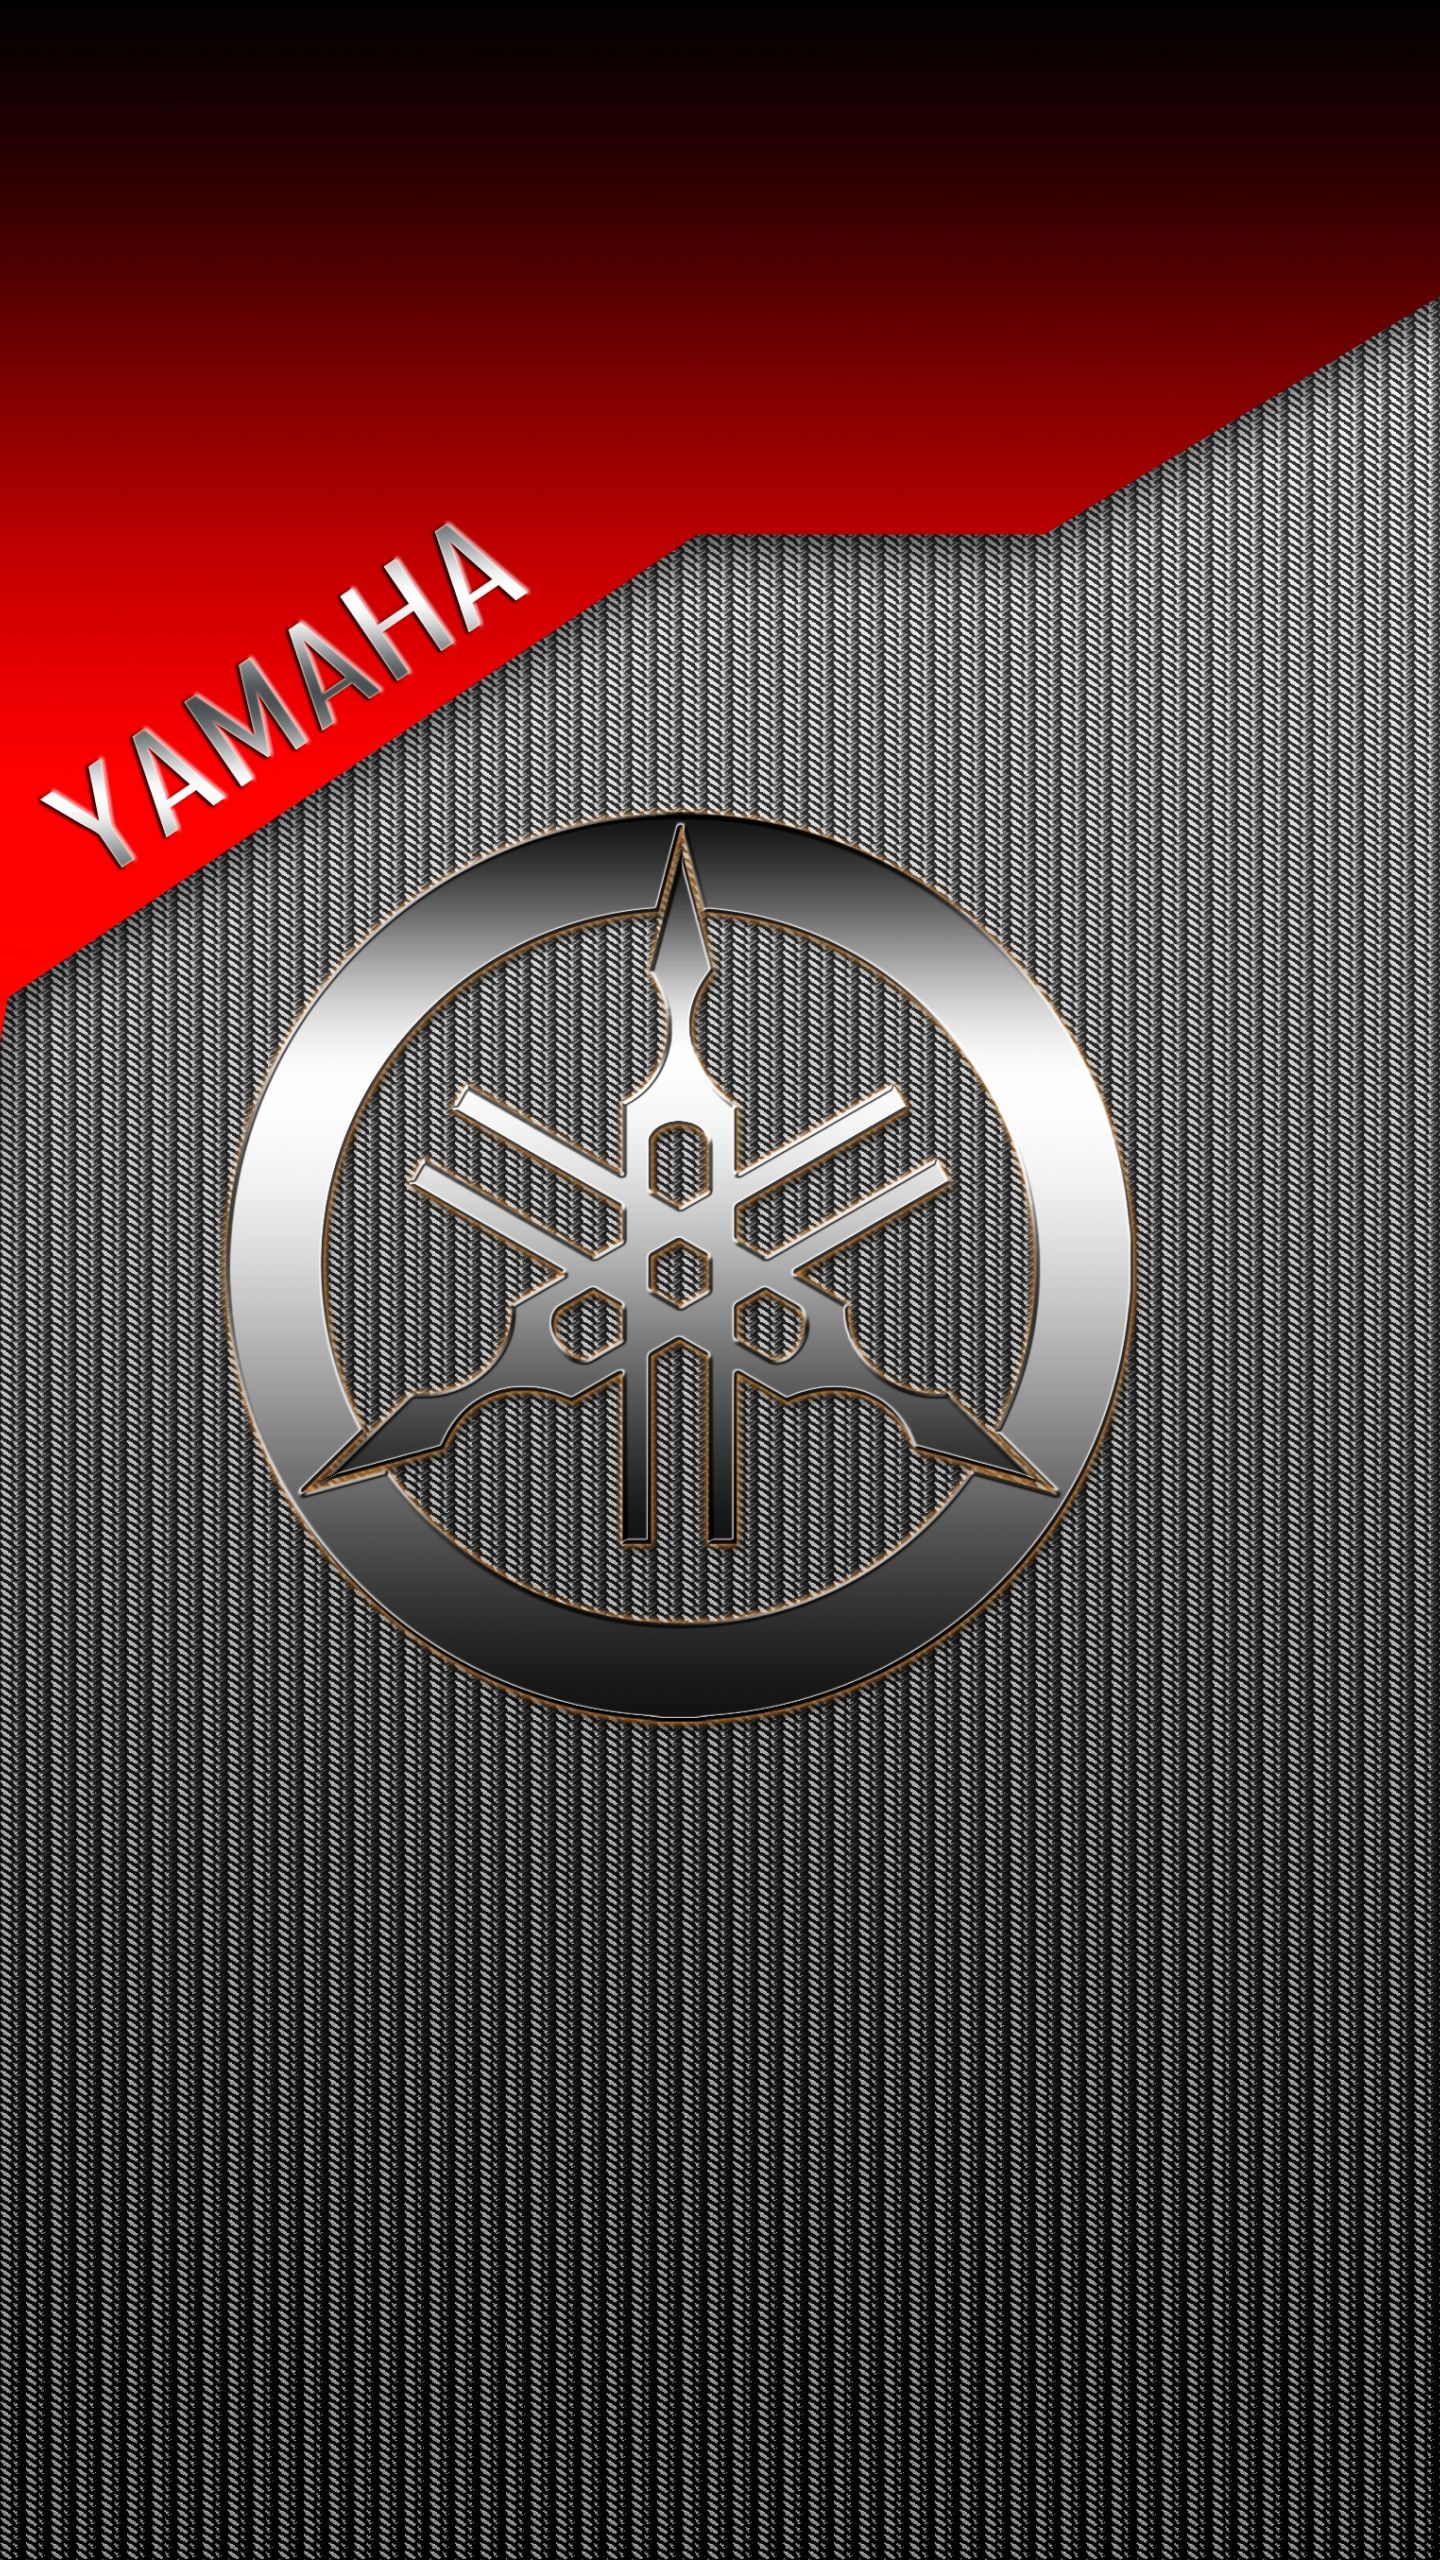 Yamaha Wallpapers 4k Hd Yamaha Backgrounds On Wallpaperbat